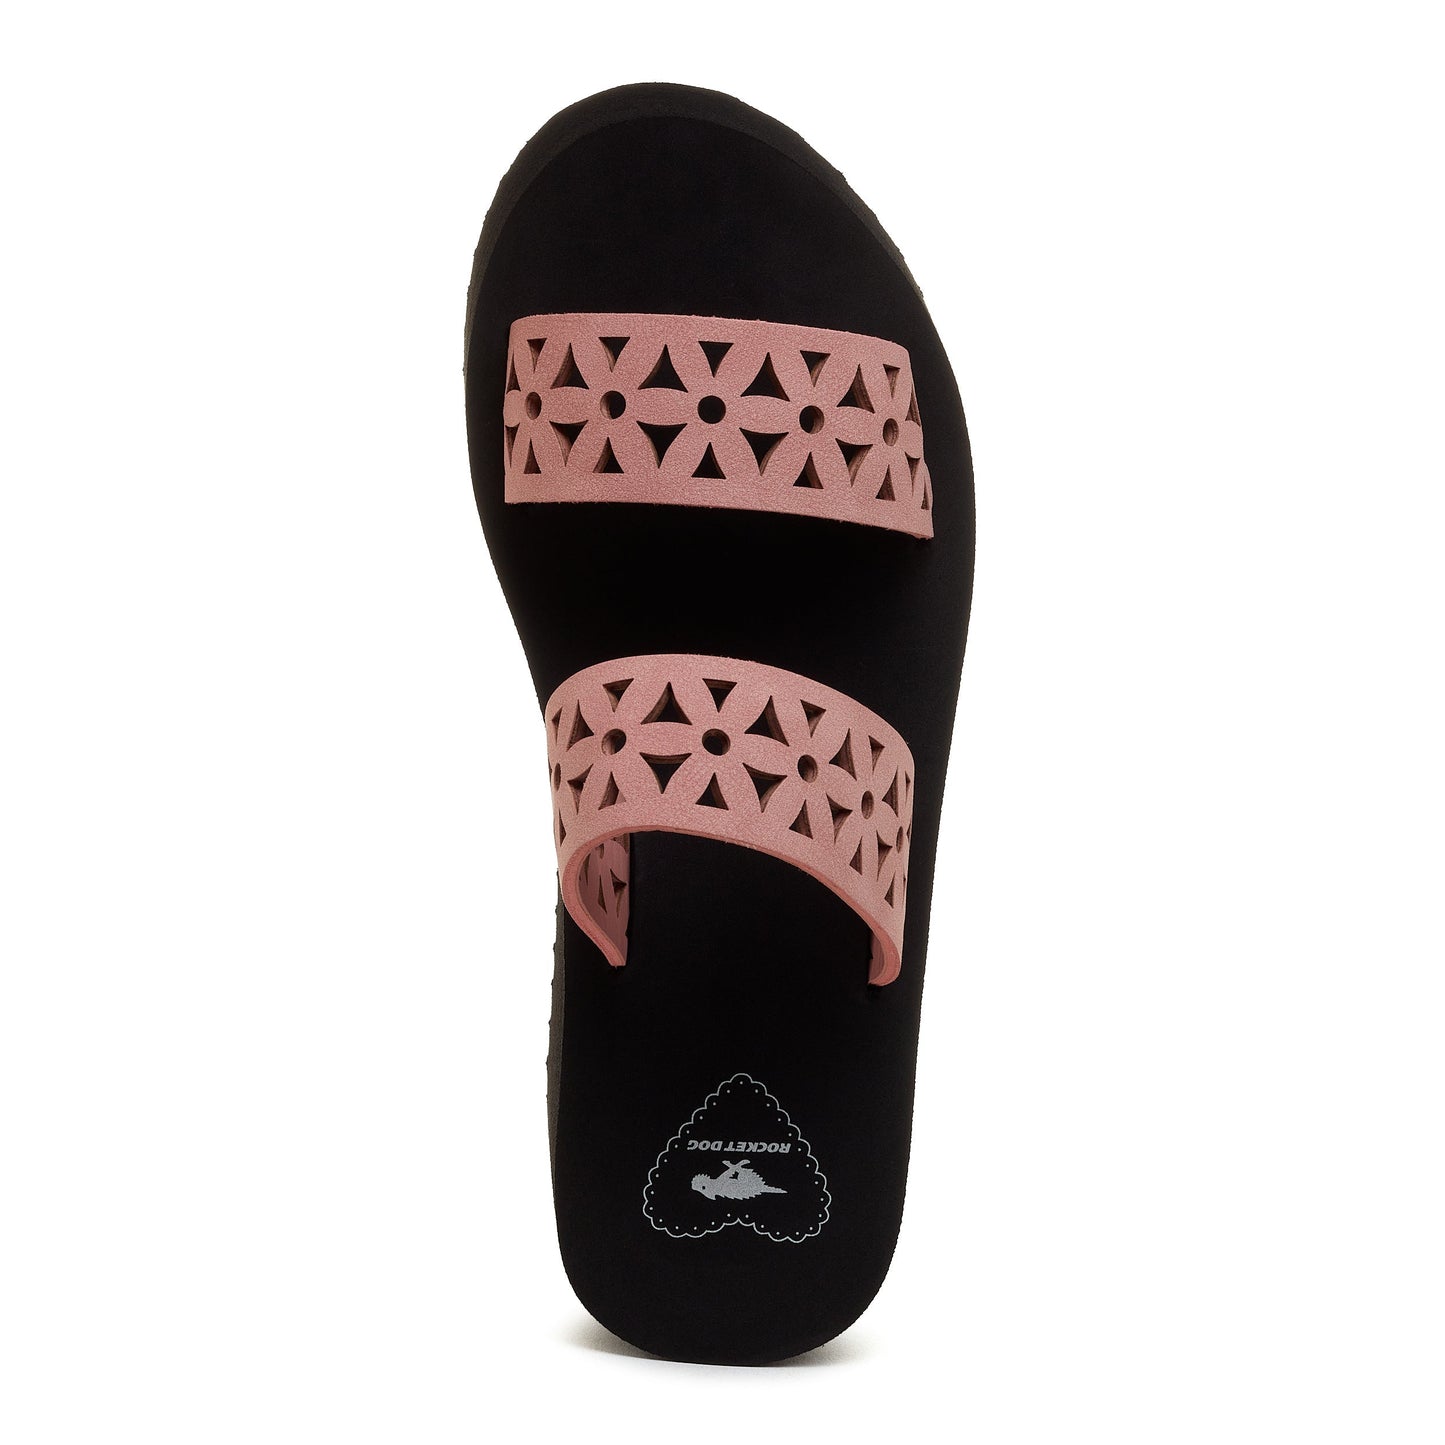 Rocket Dog® Women's Hippy Pink Cutout Wedge Sandal